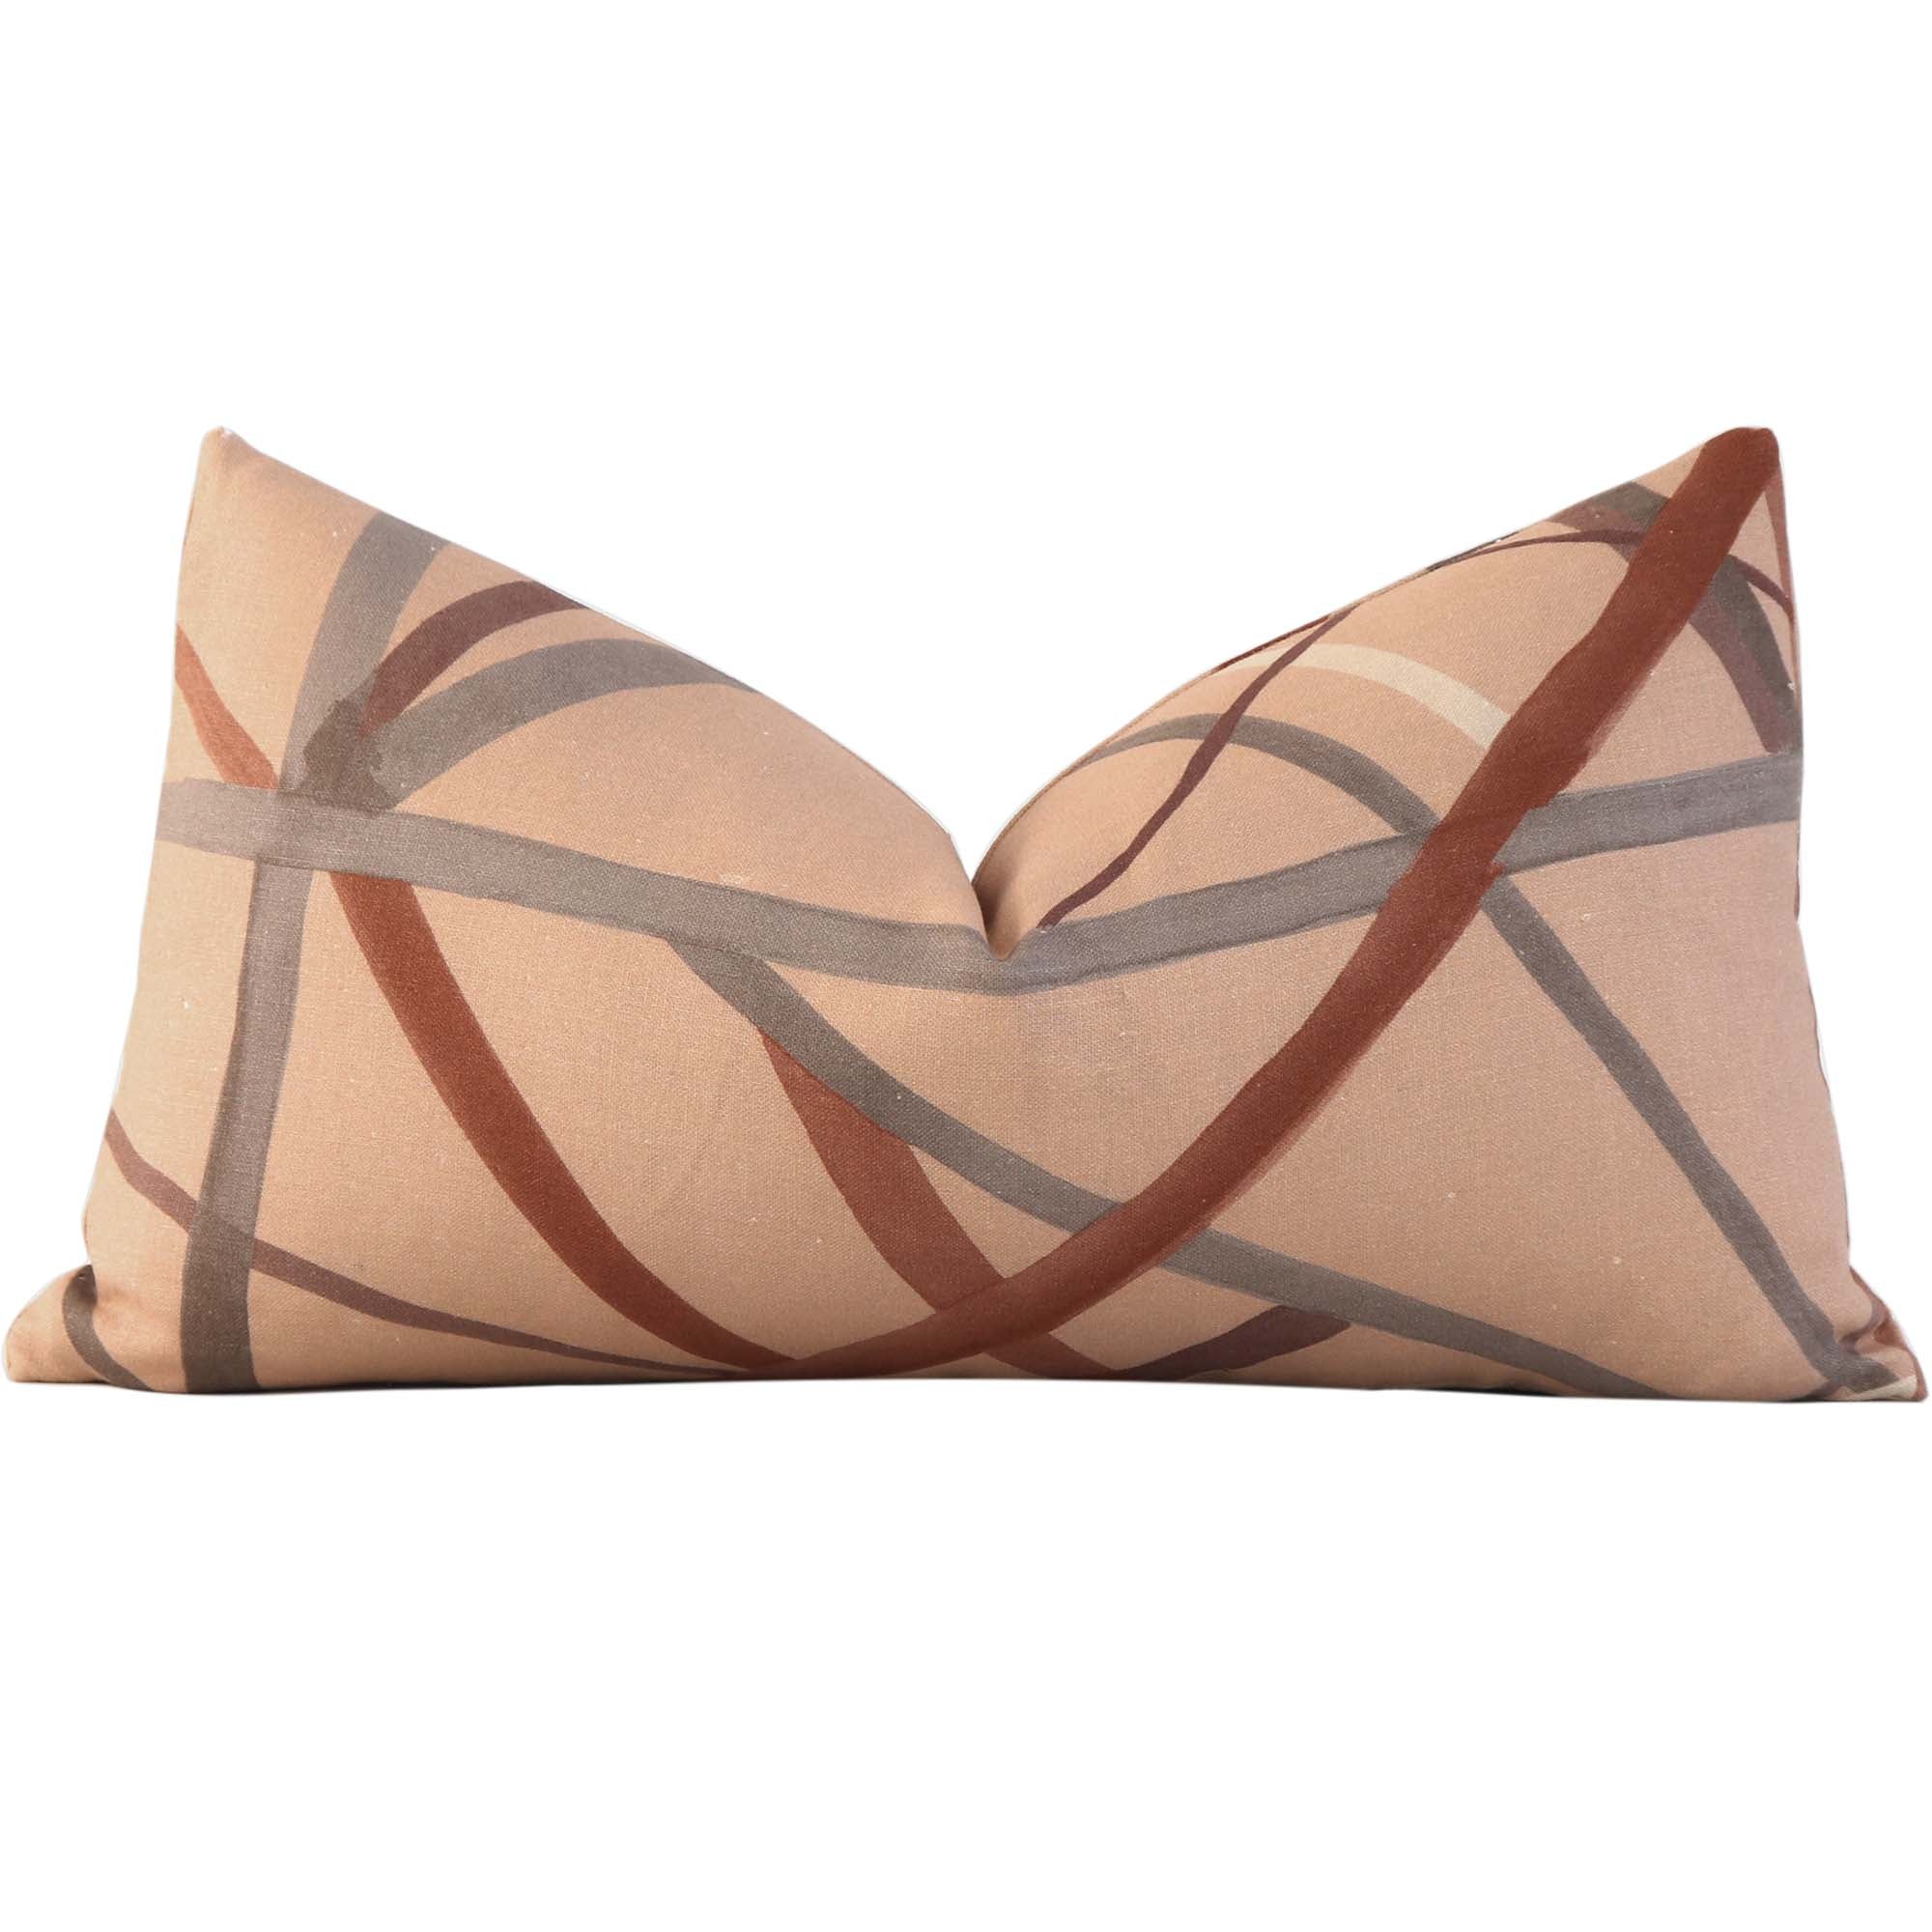 Kelly Wearstler Simpatico Faded Terracotta Striped Designer Decorative Lumbar Throw Pillow Cover